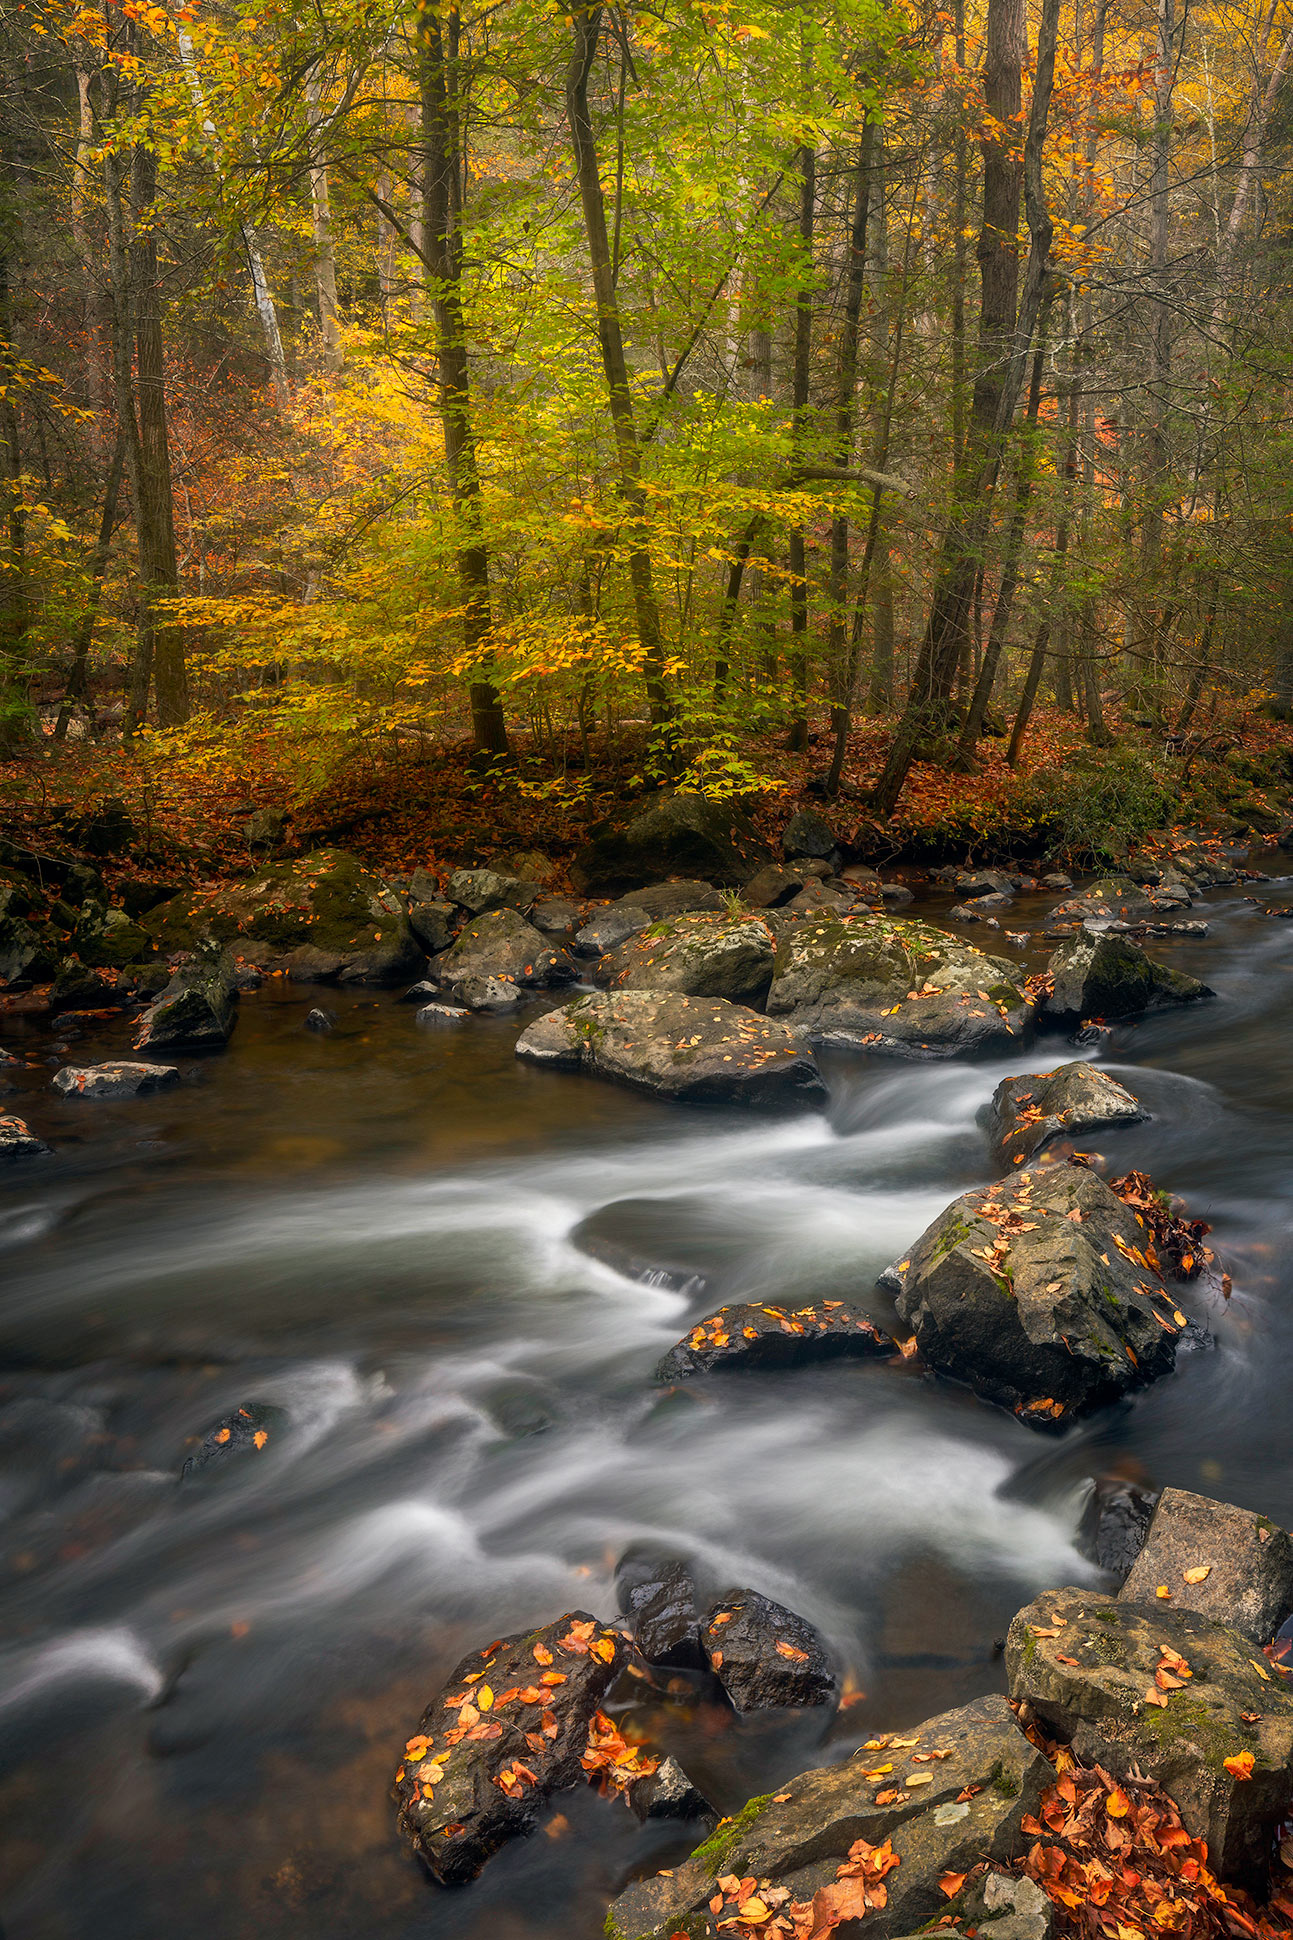 Fall river scene along the Raritan River at Ken Lockwood Gorge, NJ -Enchanted